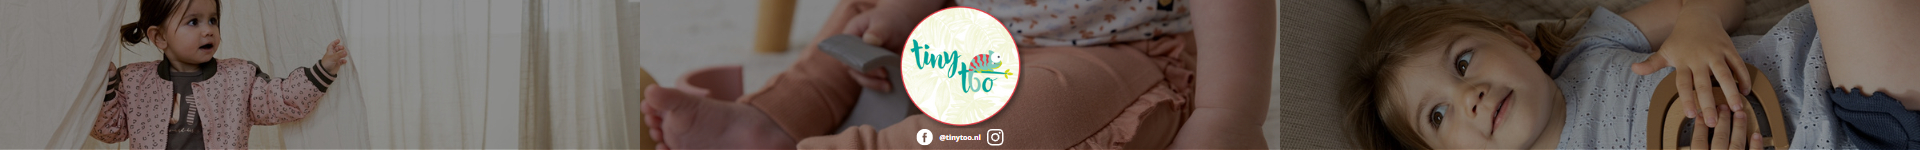 Tinytoo.nls achtergrond